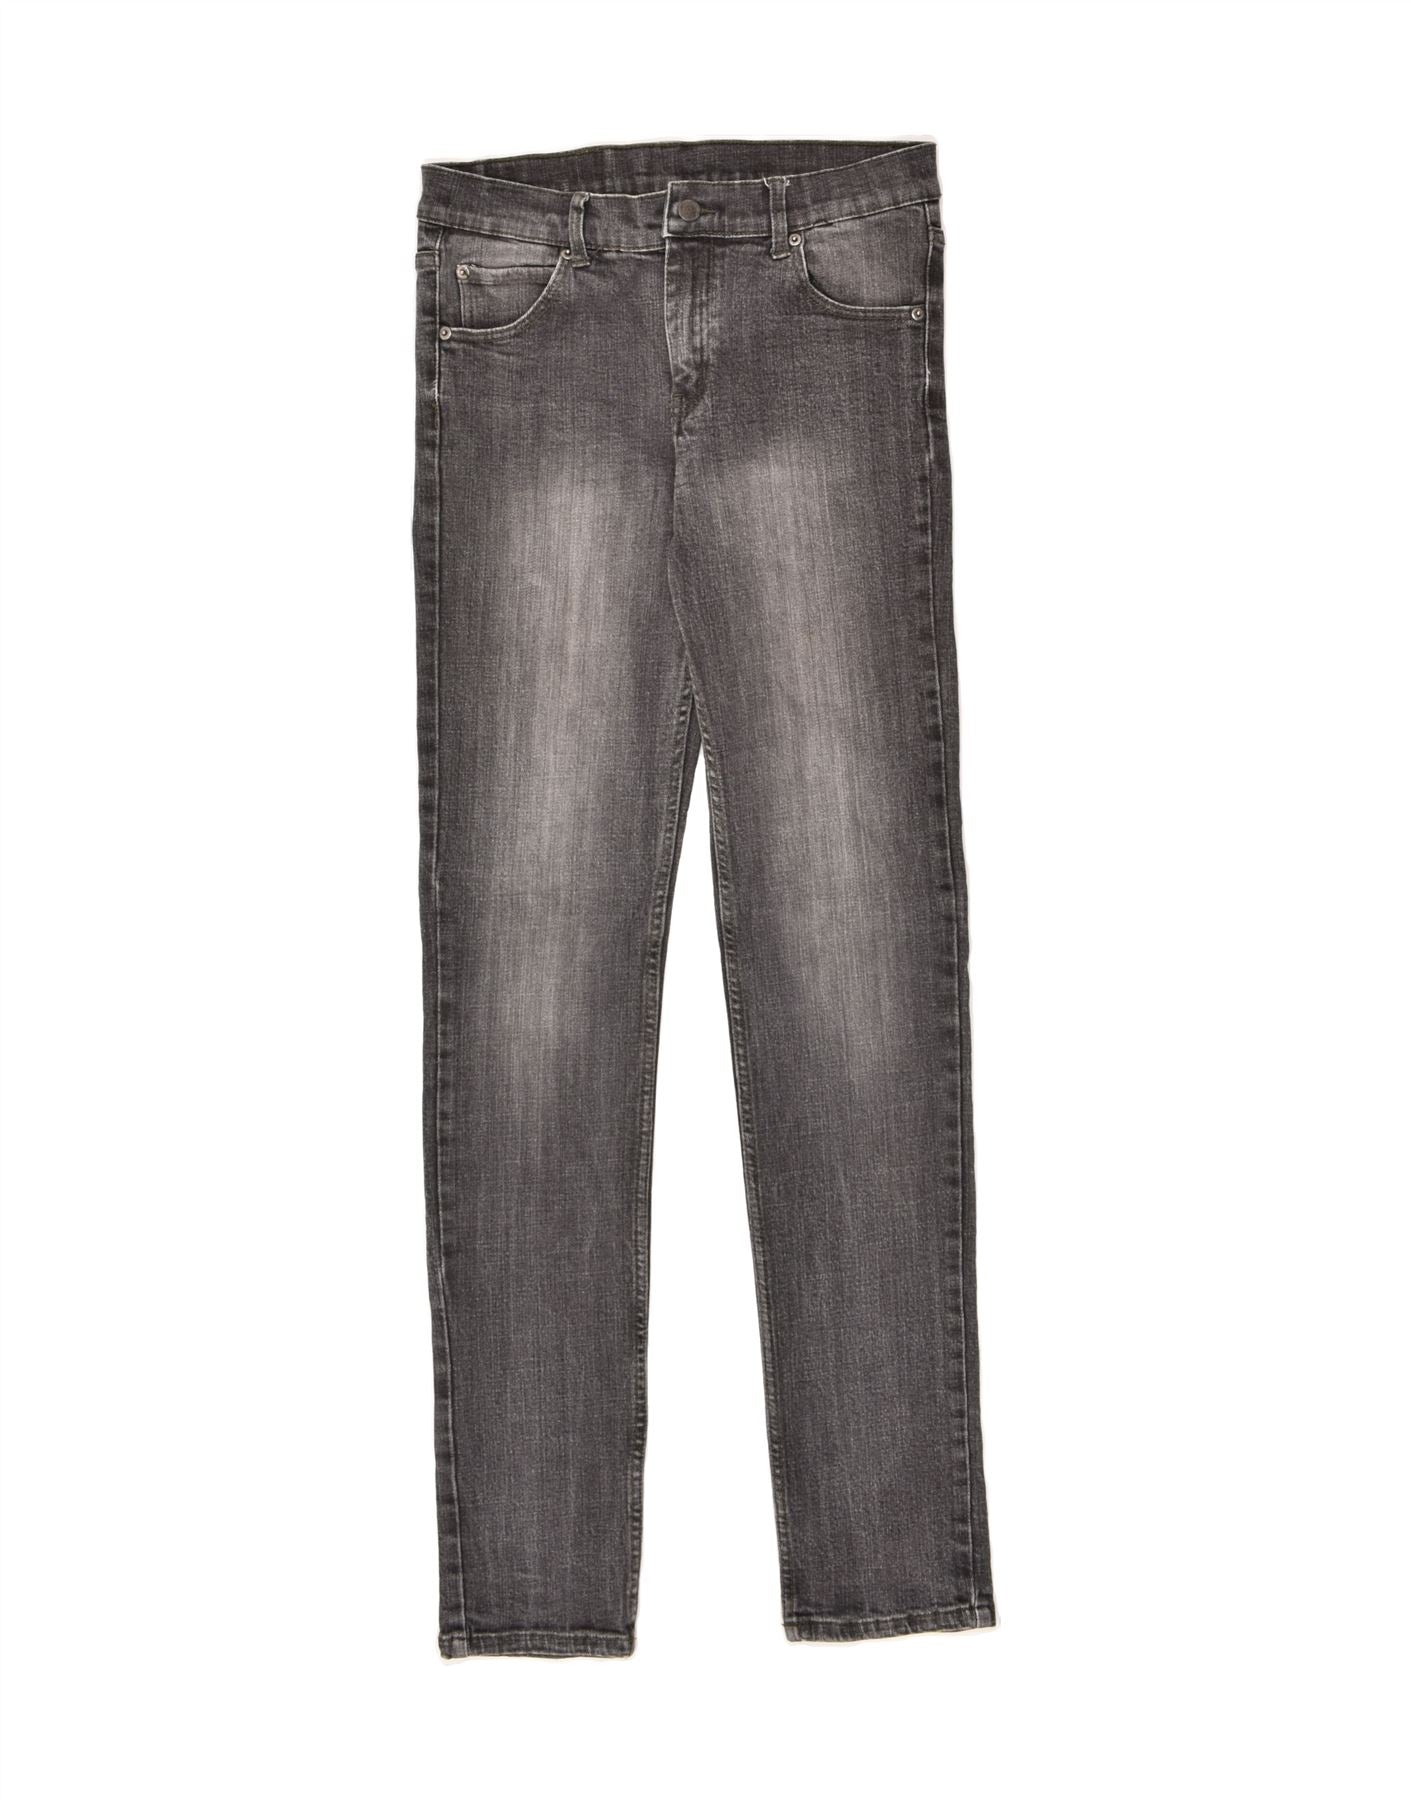 CHEAP MONDAY Tight Aniara Light Mens W33 L32 Slim Fit Jeans Denim Pants  Trousers | eBay